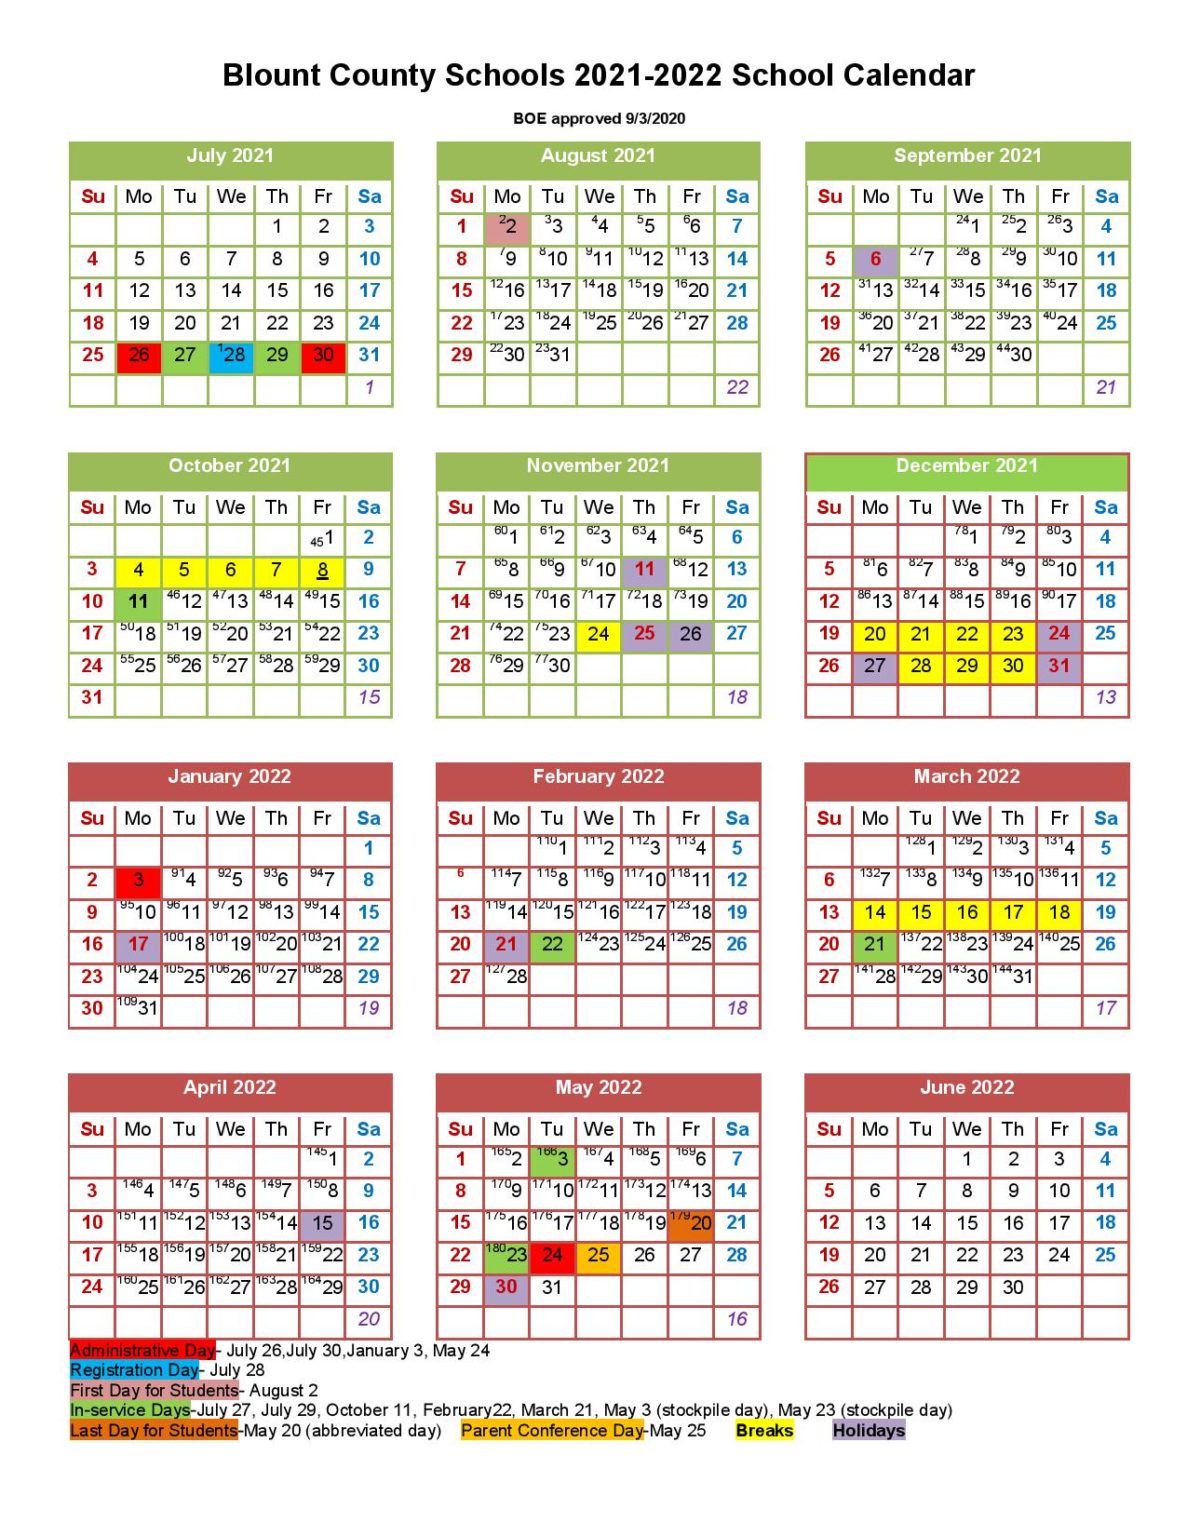 Blount County Schools Calendar 2021-2022 in PDF Format